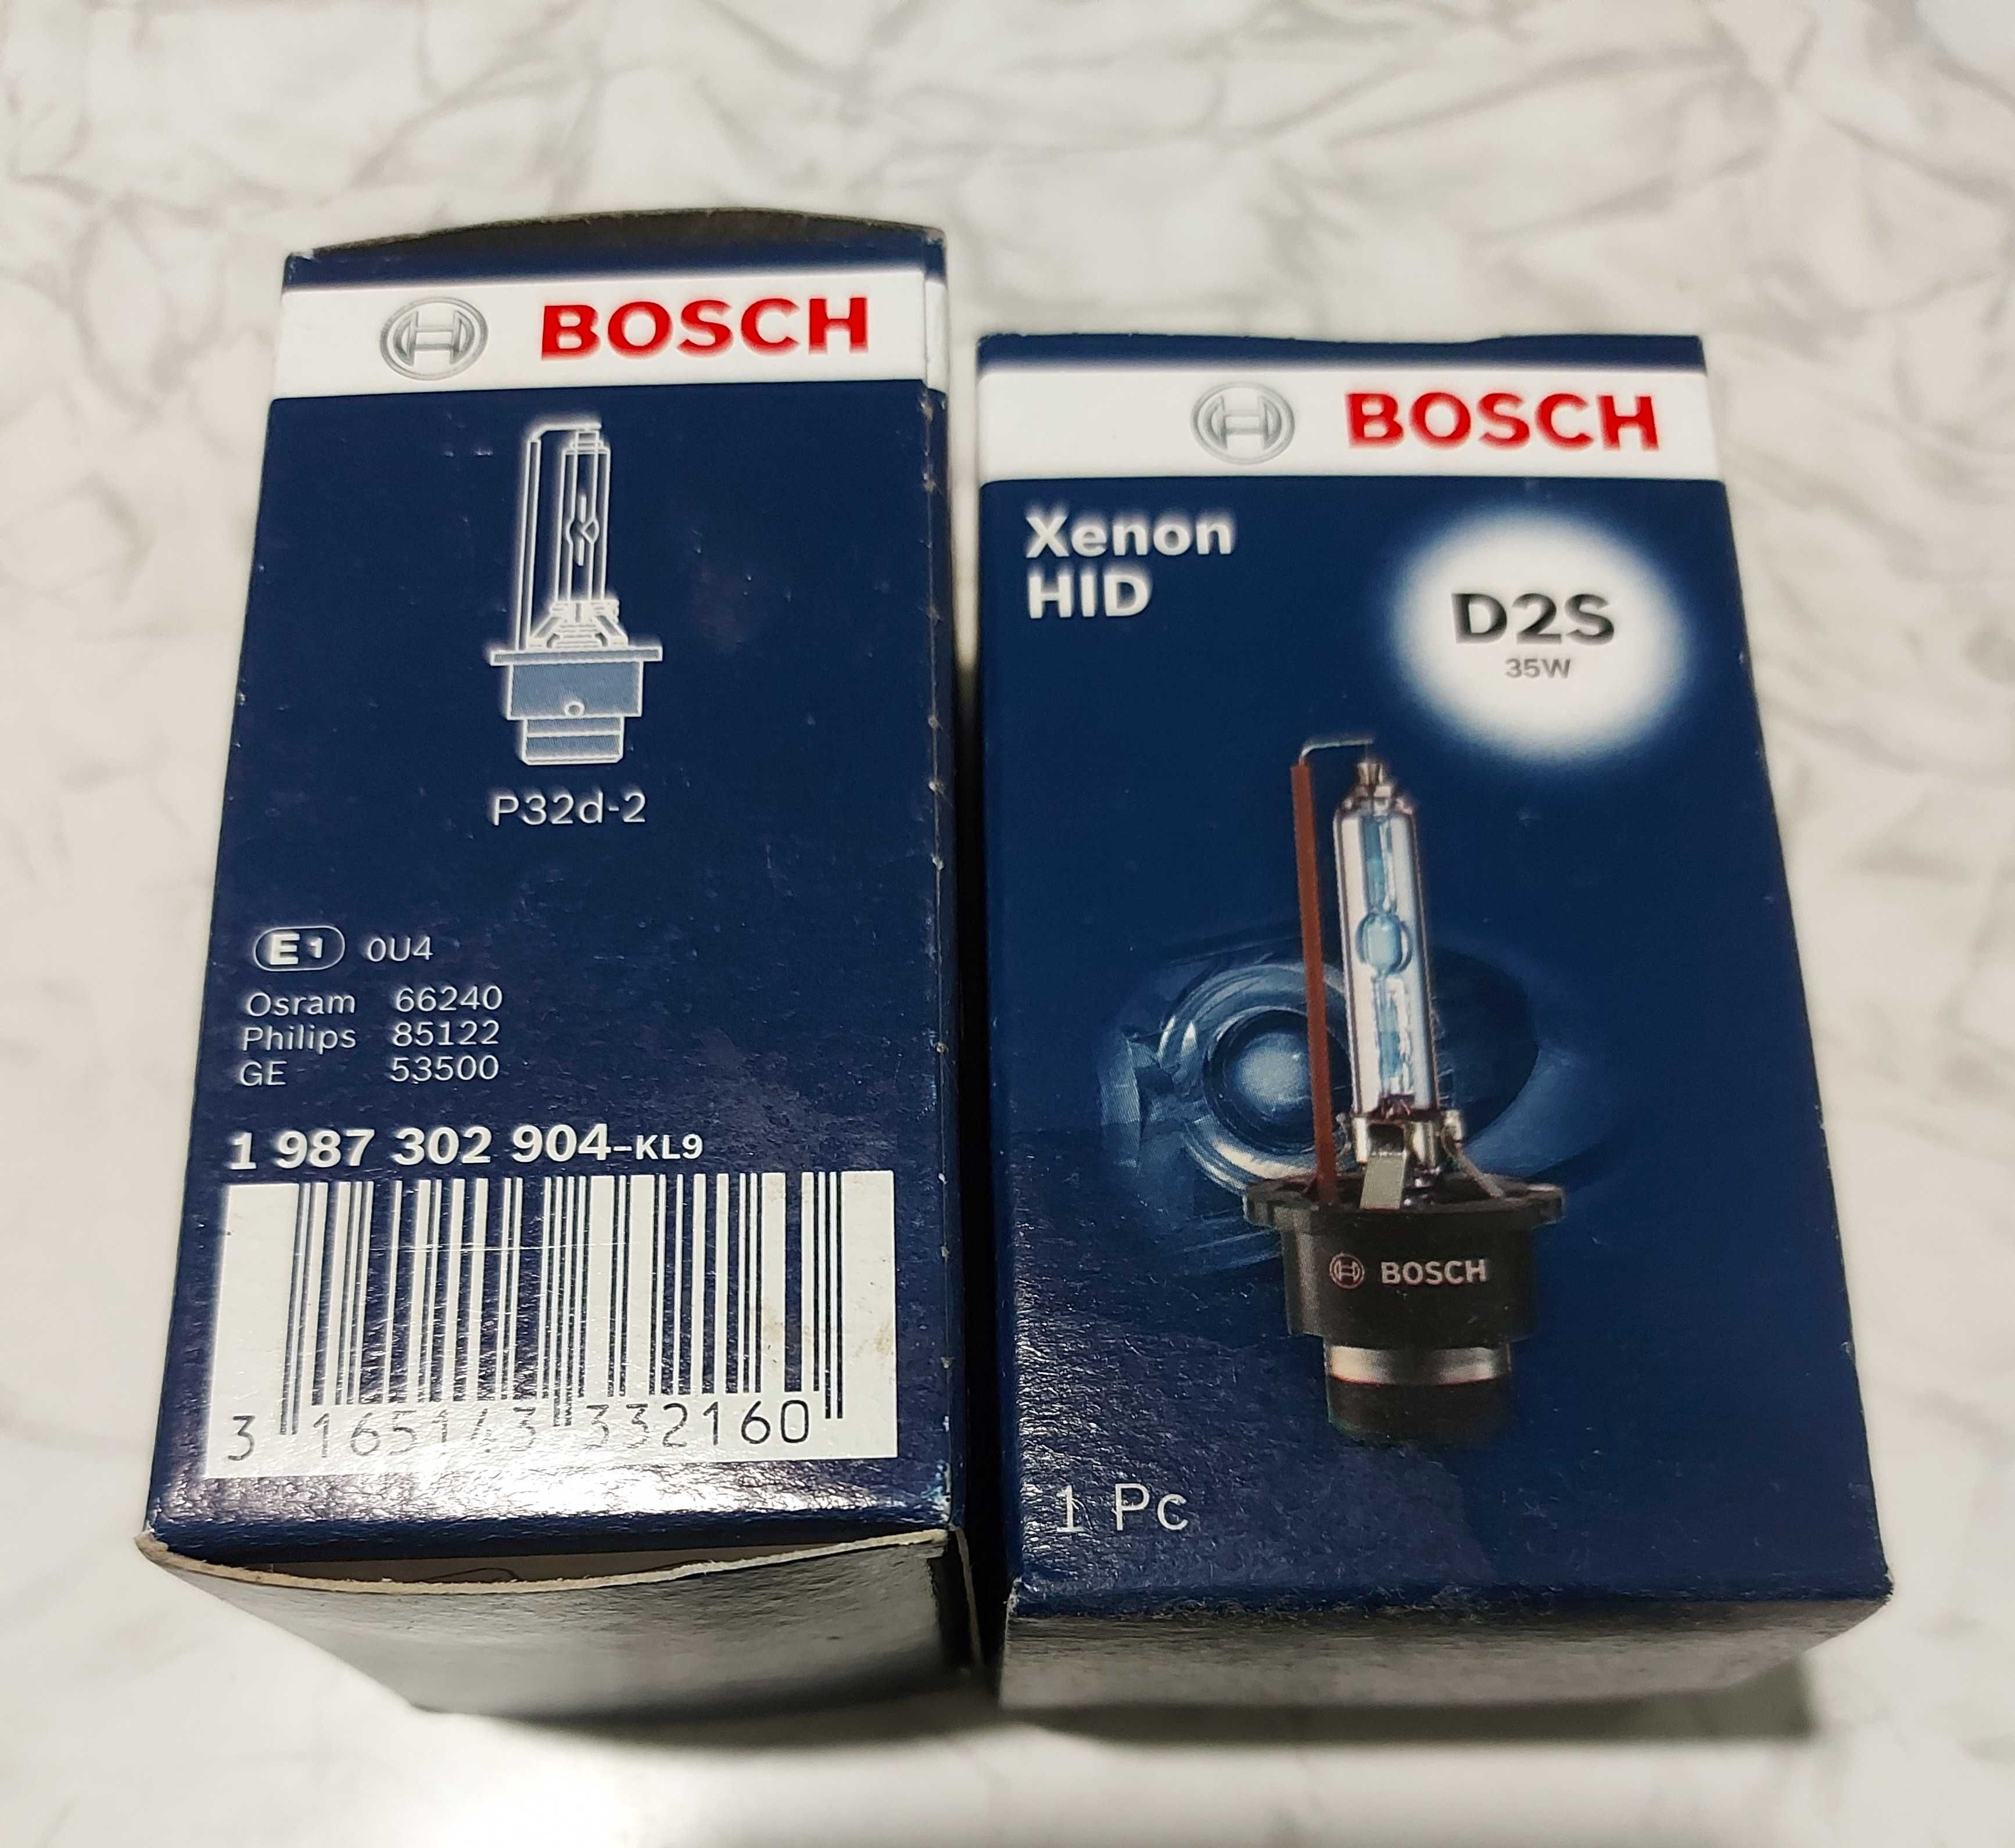 Bosch Xenon HID D2S 35W, пара